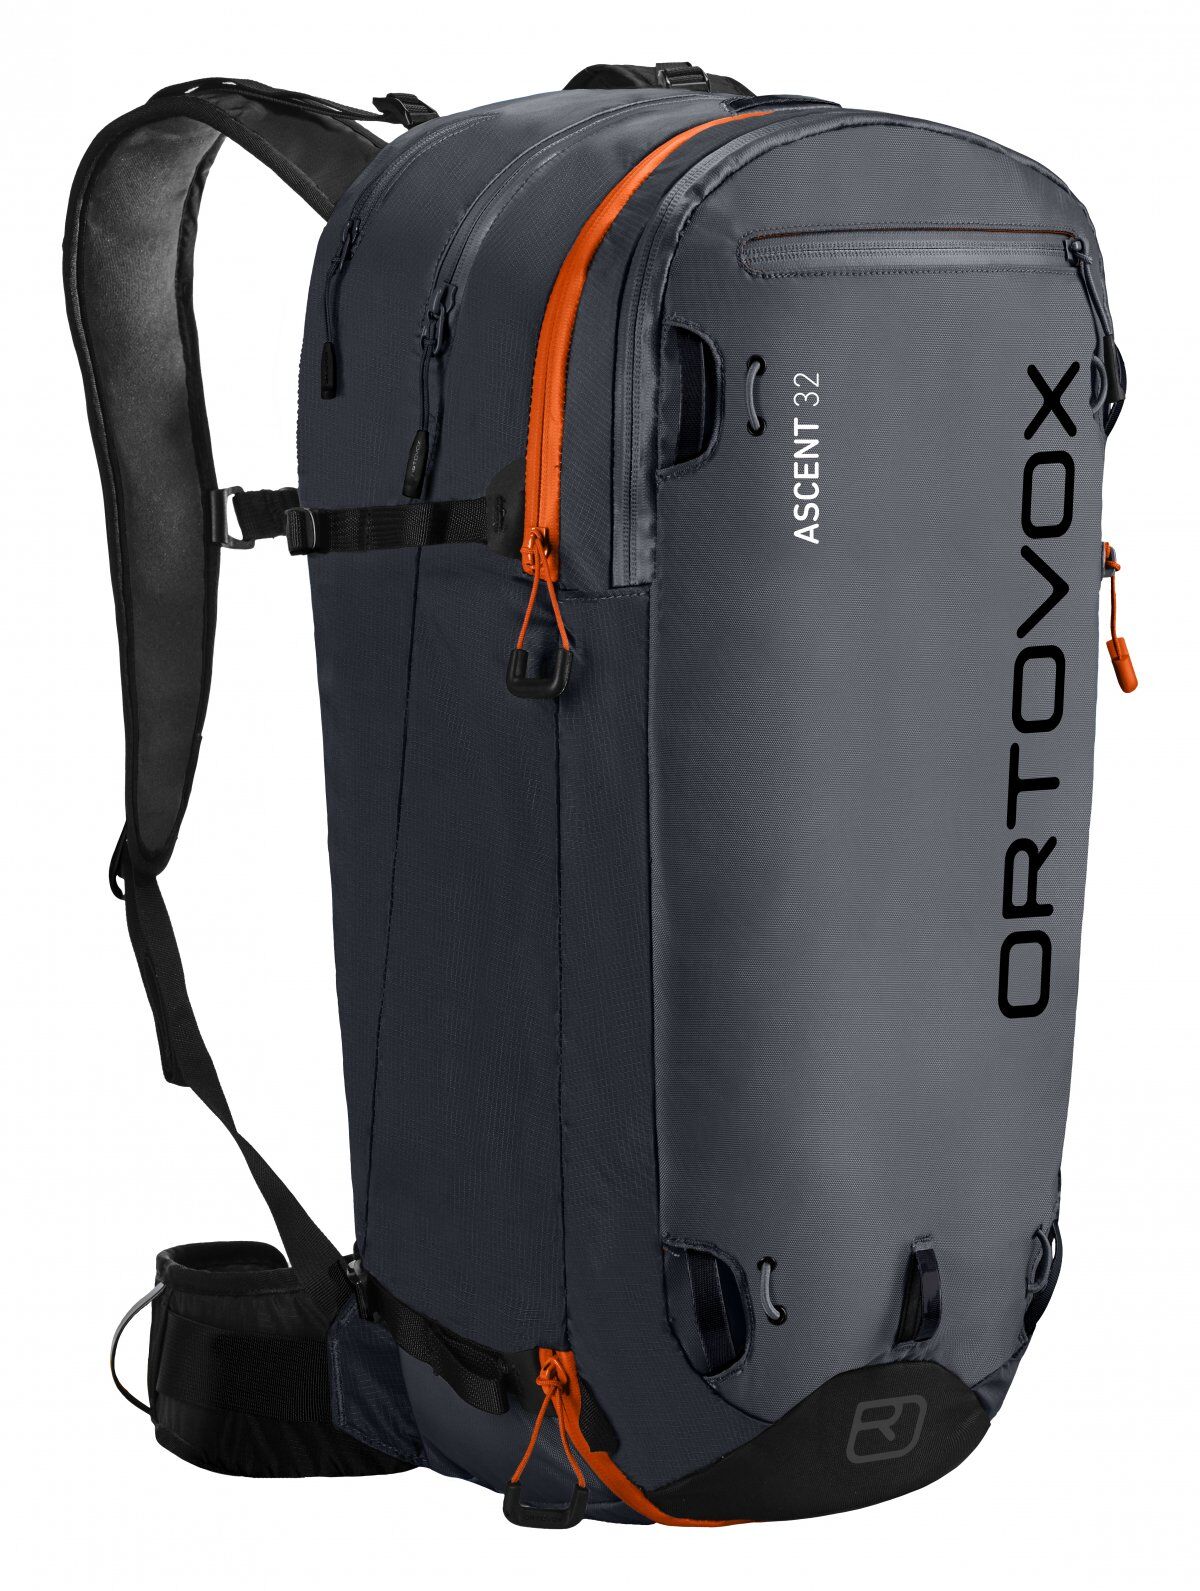 Ascent 32 - Ski Touring backpack